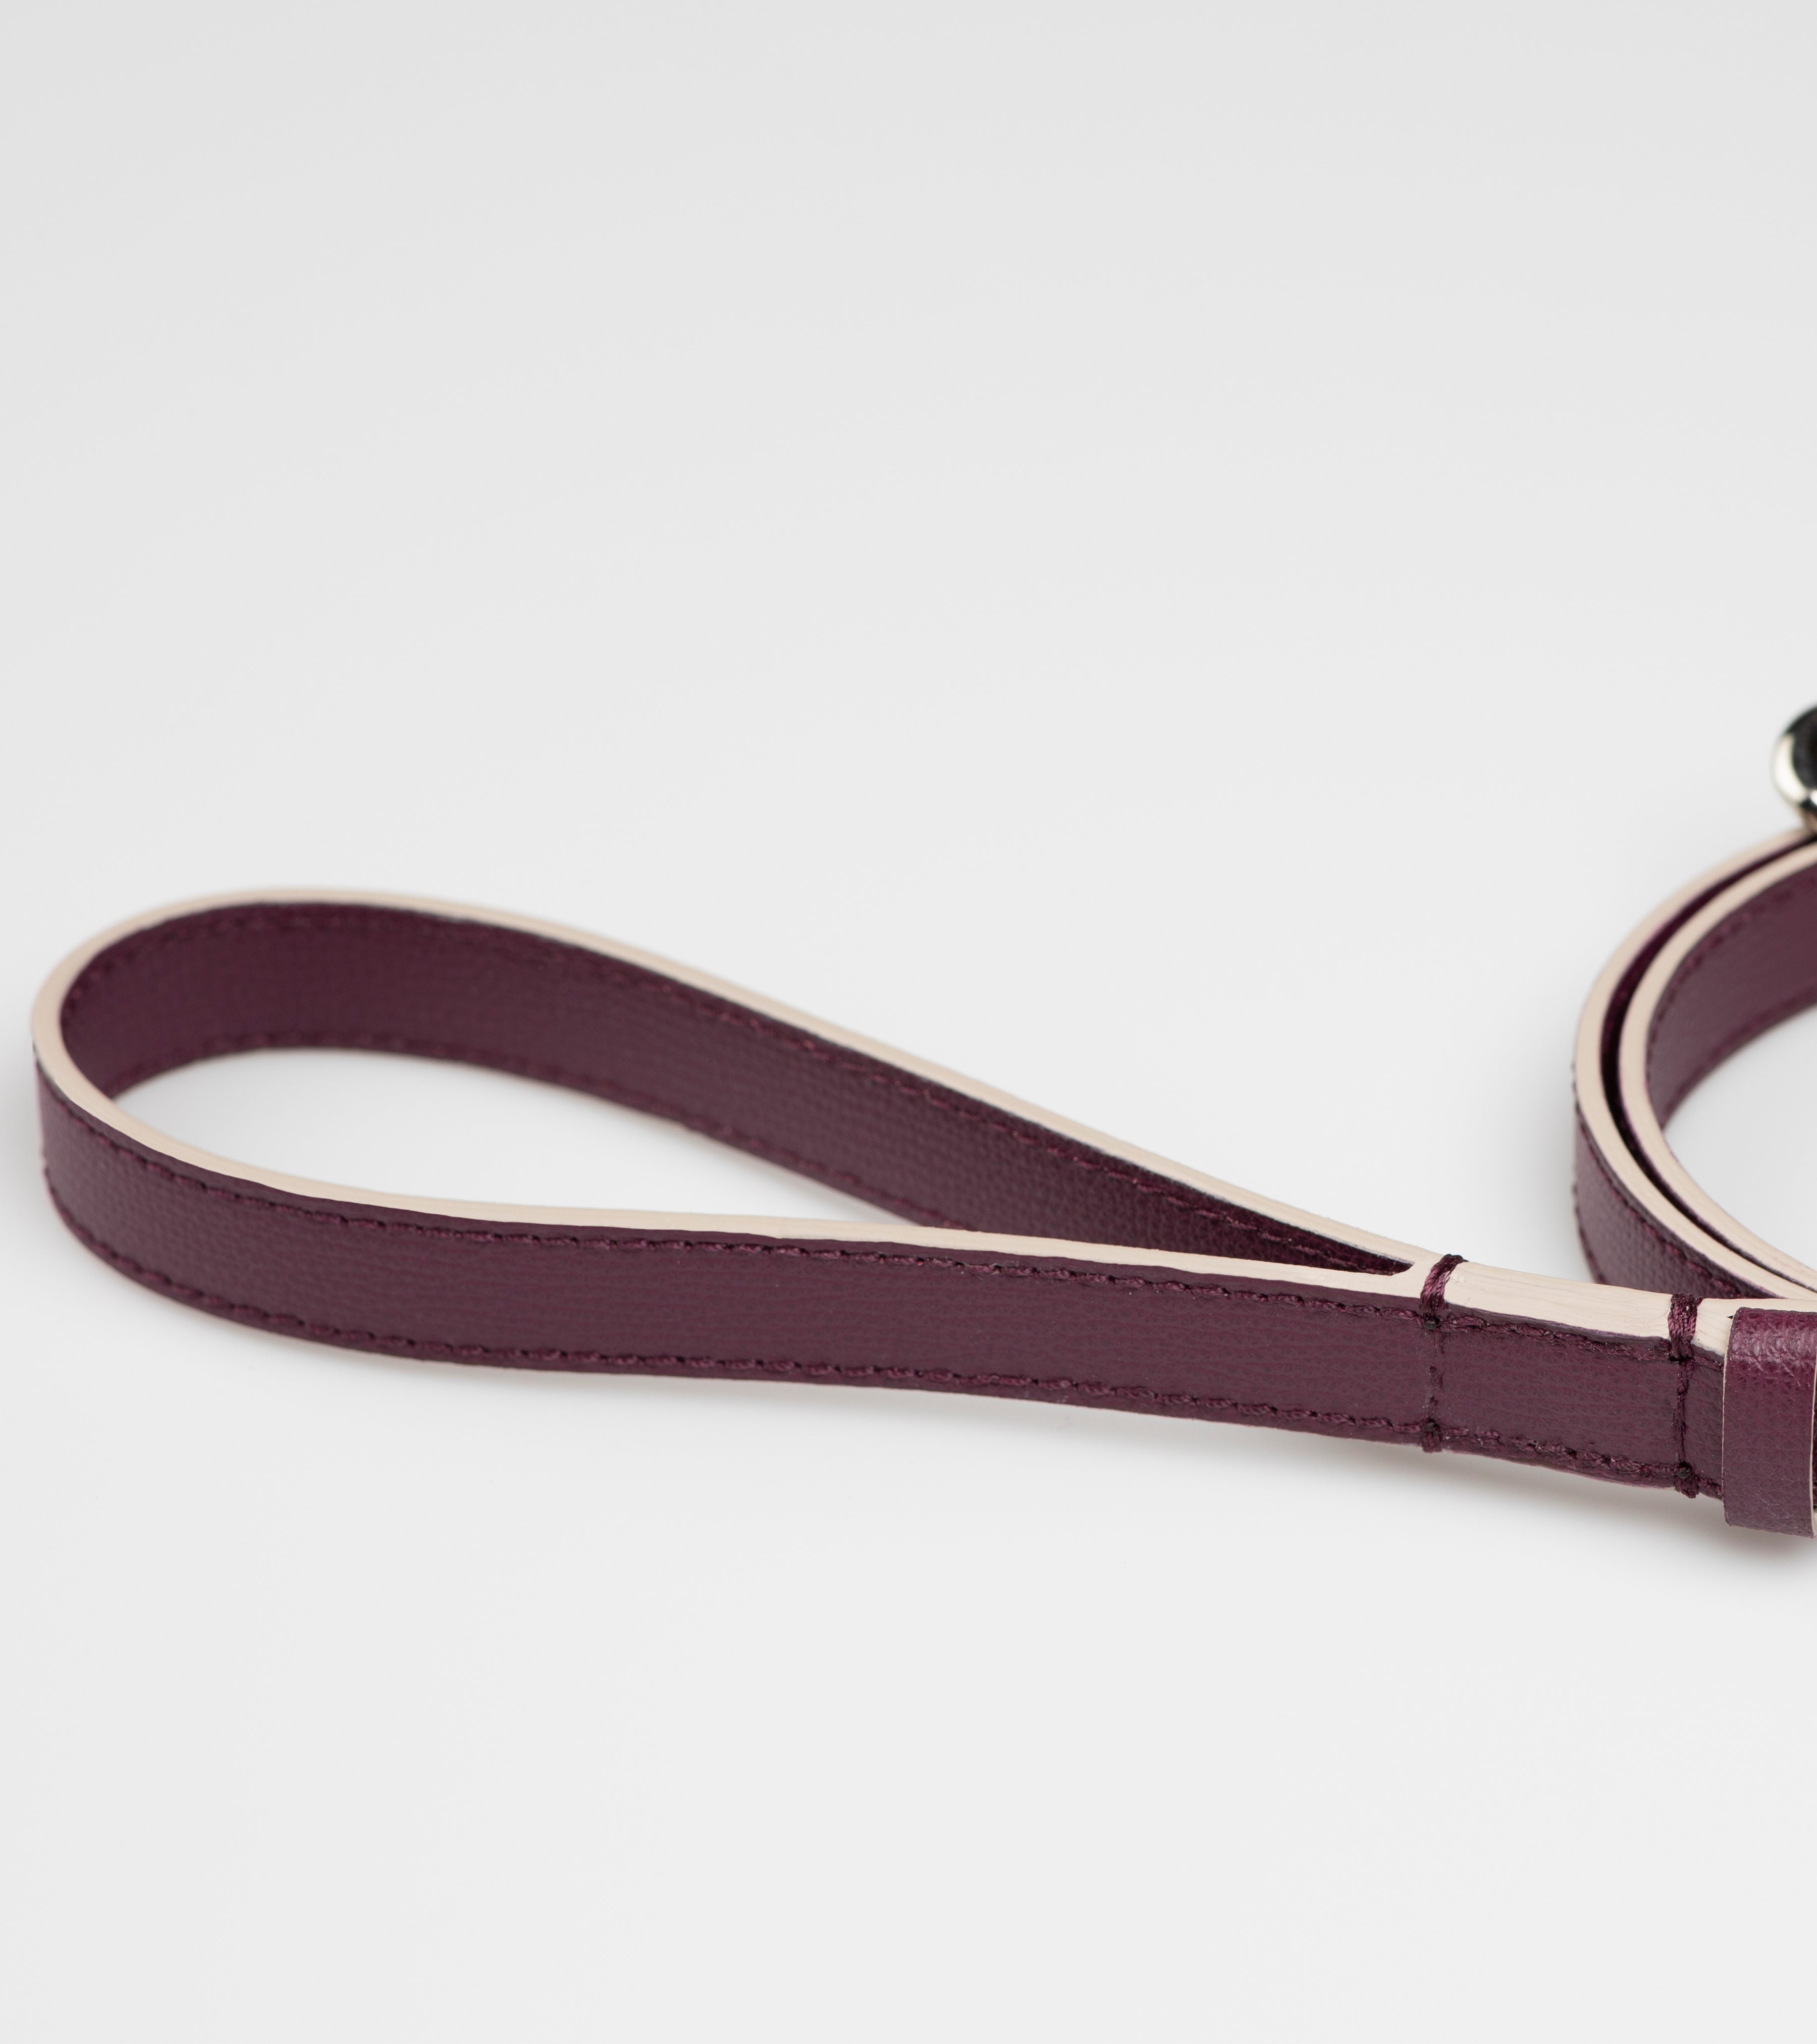 dog-leash-printed-leather-6_11050c59-7f87-47b4-a50e-36521cb5a014.jpg